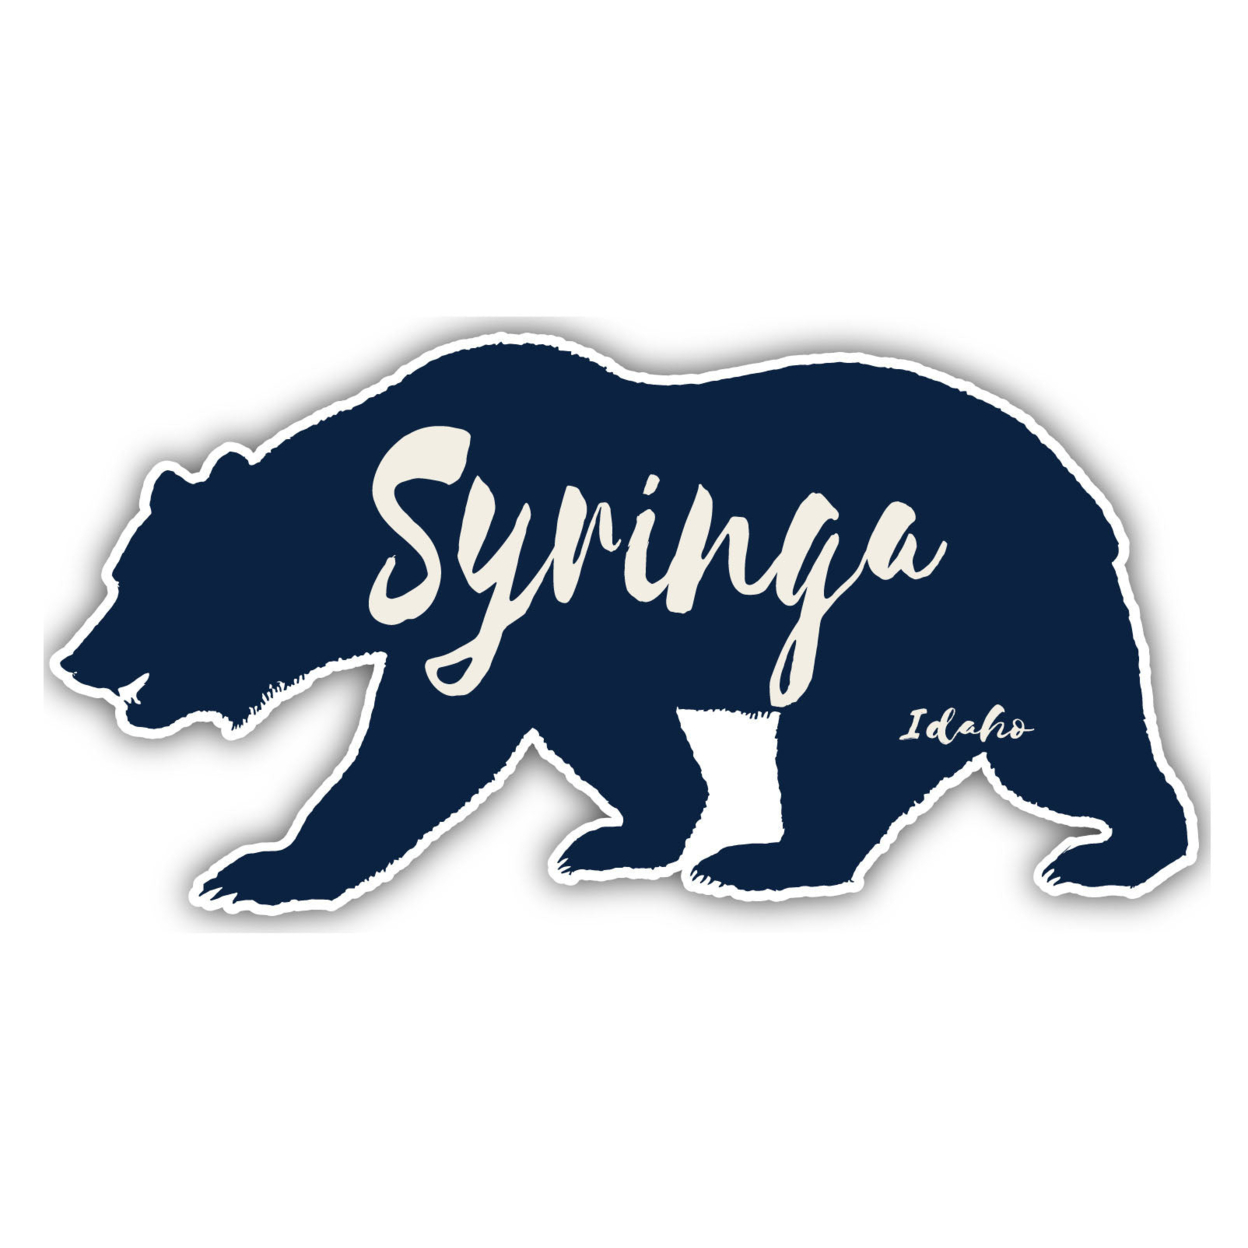 Syringa Idaho Souvenir Decorative Stickers (Choose Theme And Size) - Single Unit, 2-Inch, Bear